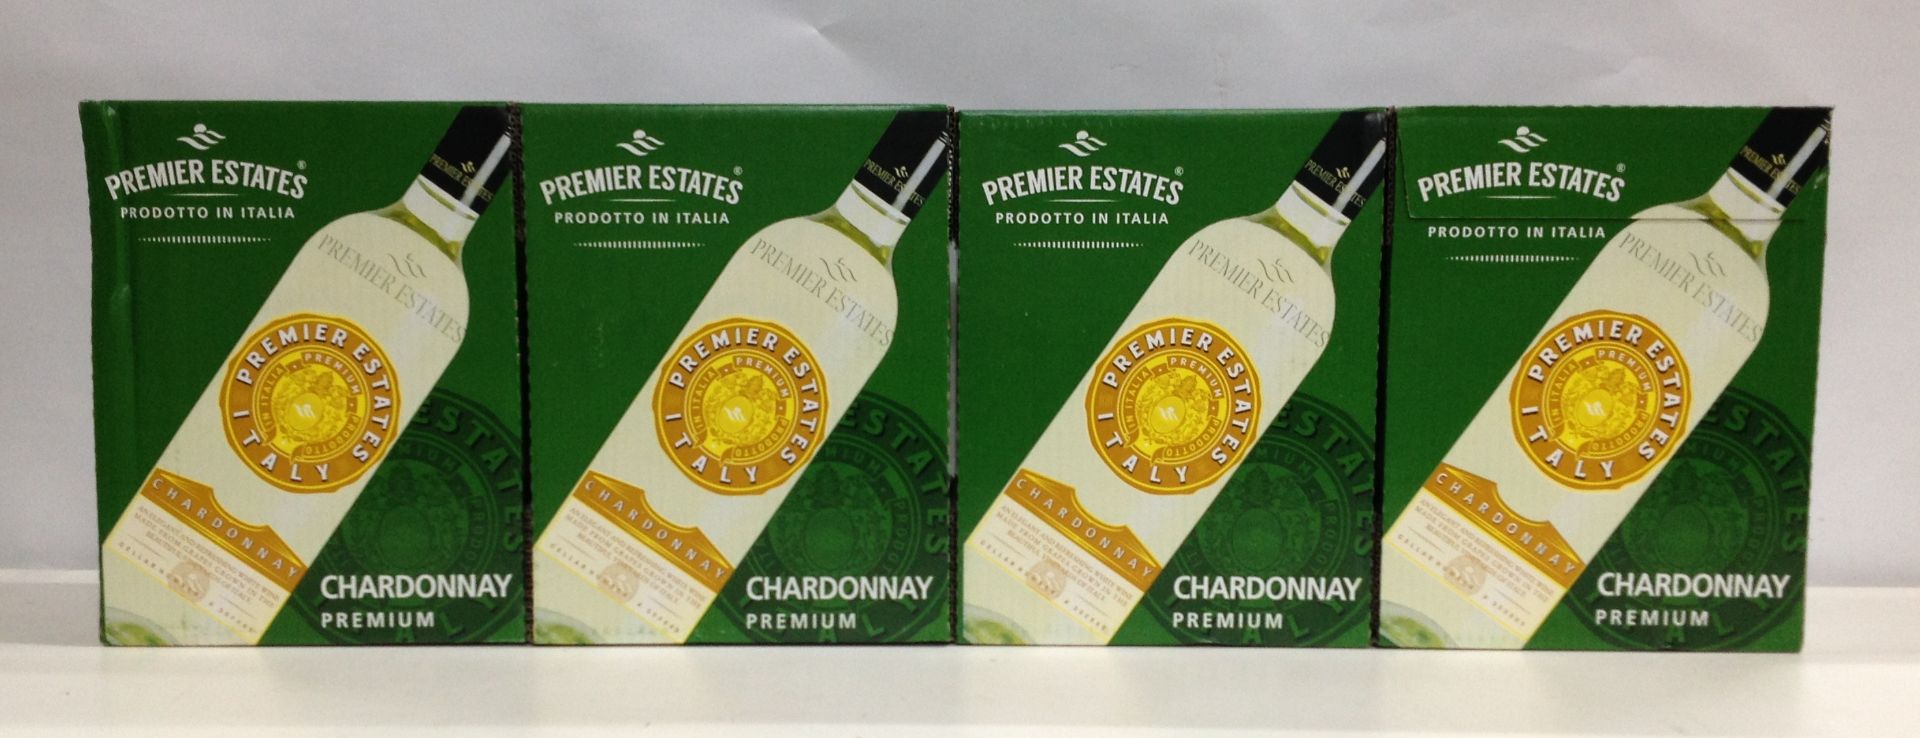 24 x 75cl Bottles Premier Estates Chardonnay Premium White Wine - Image 2 of 4